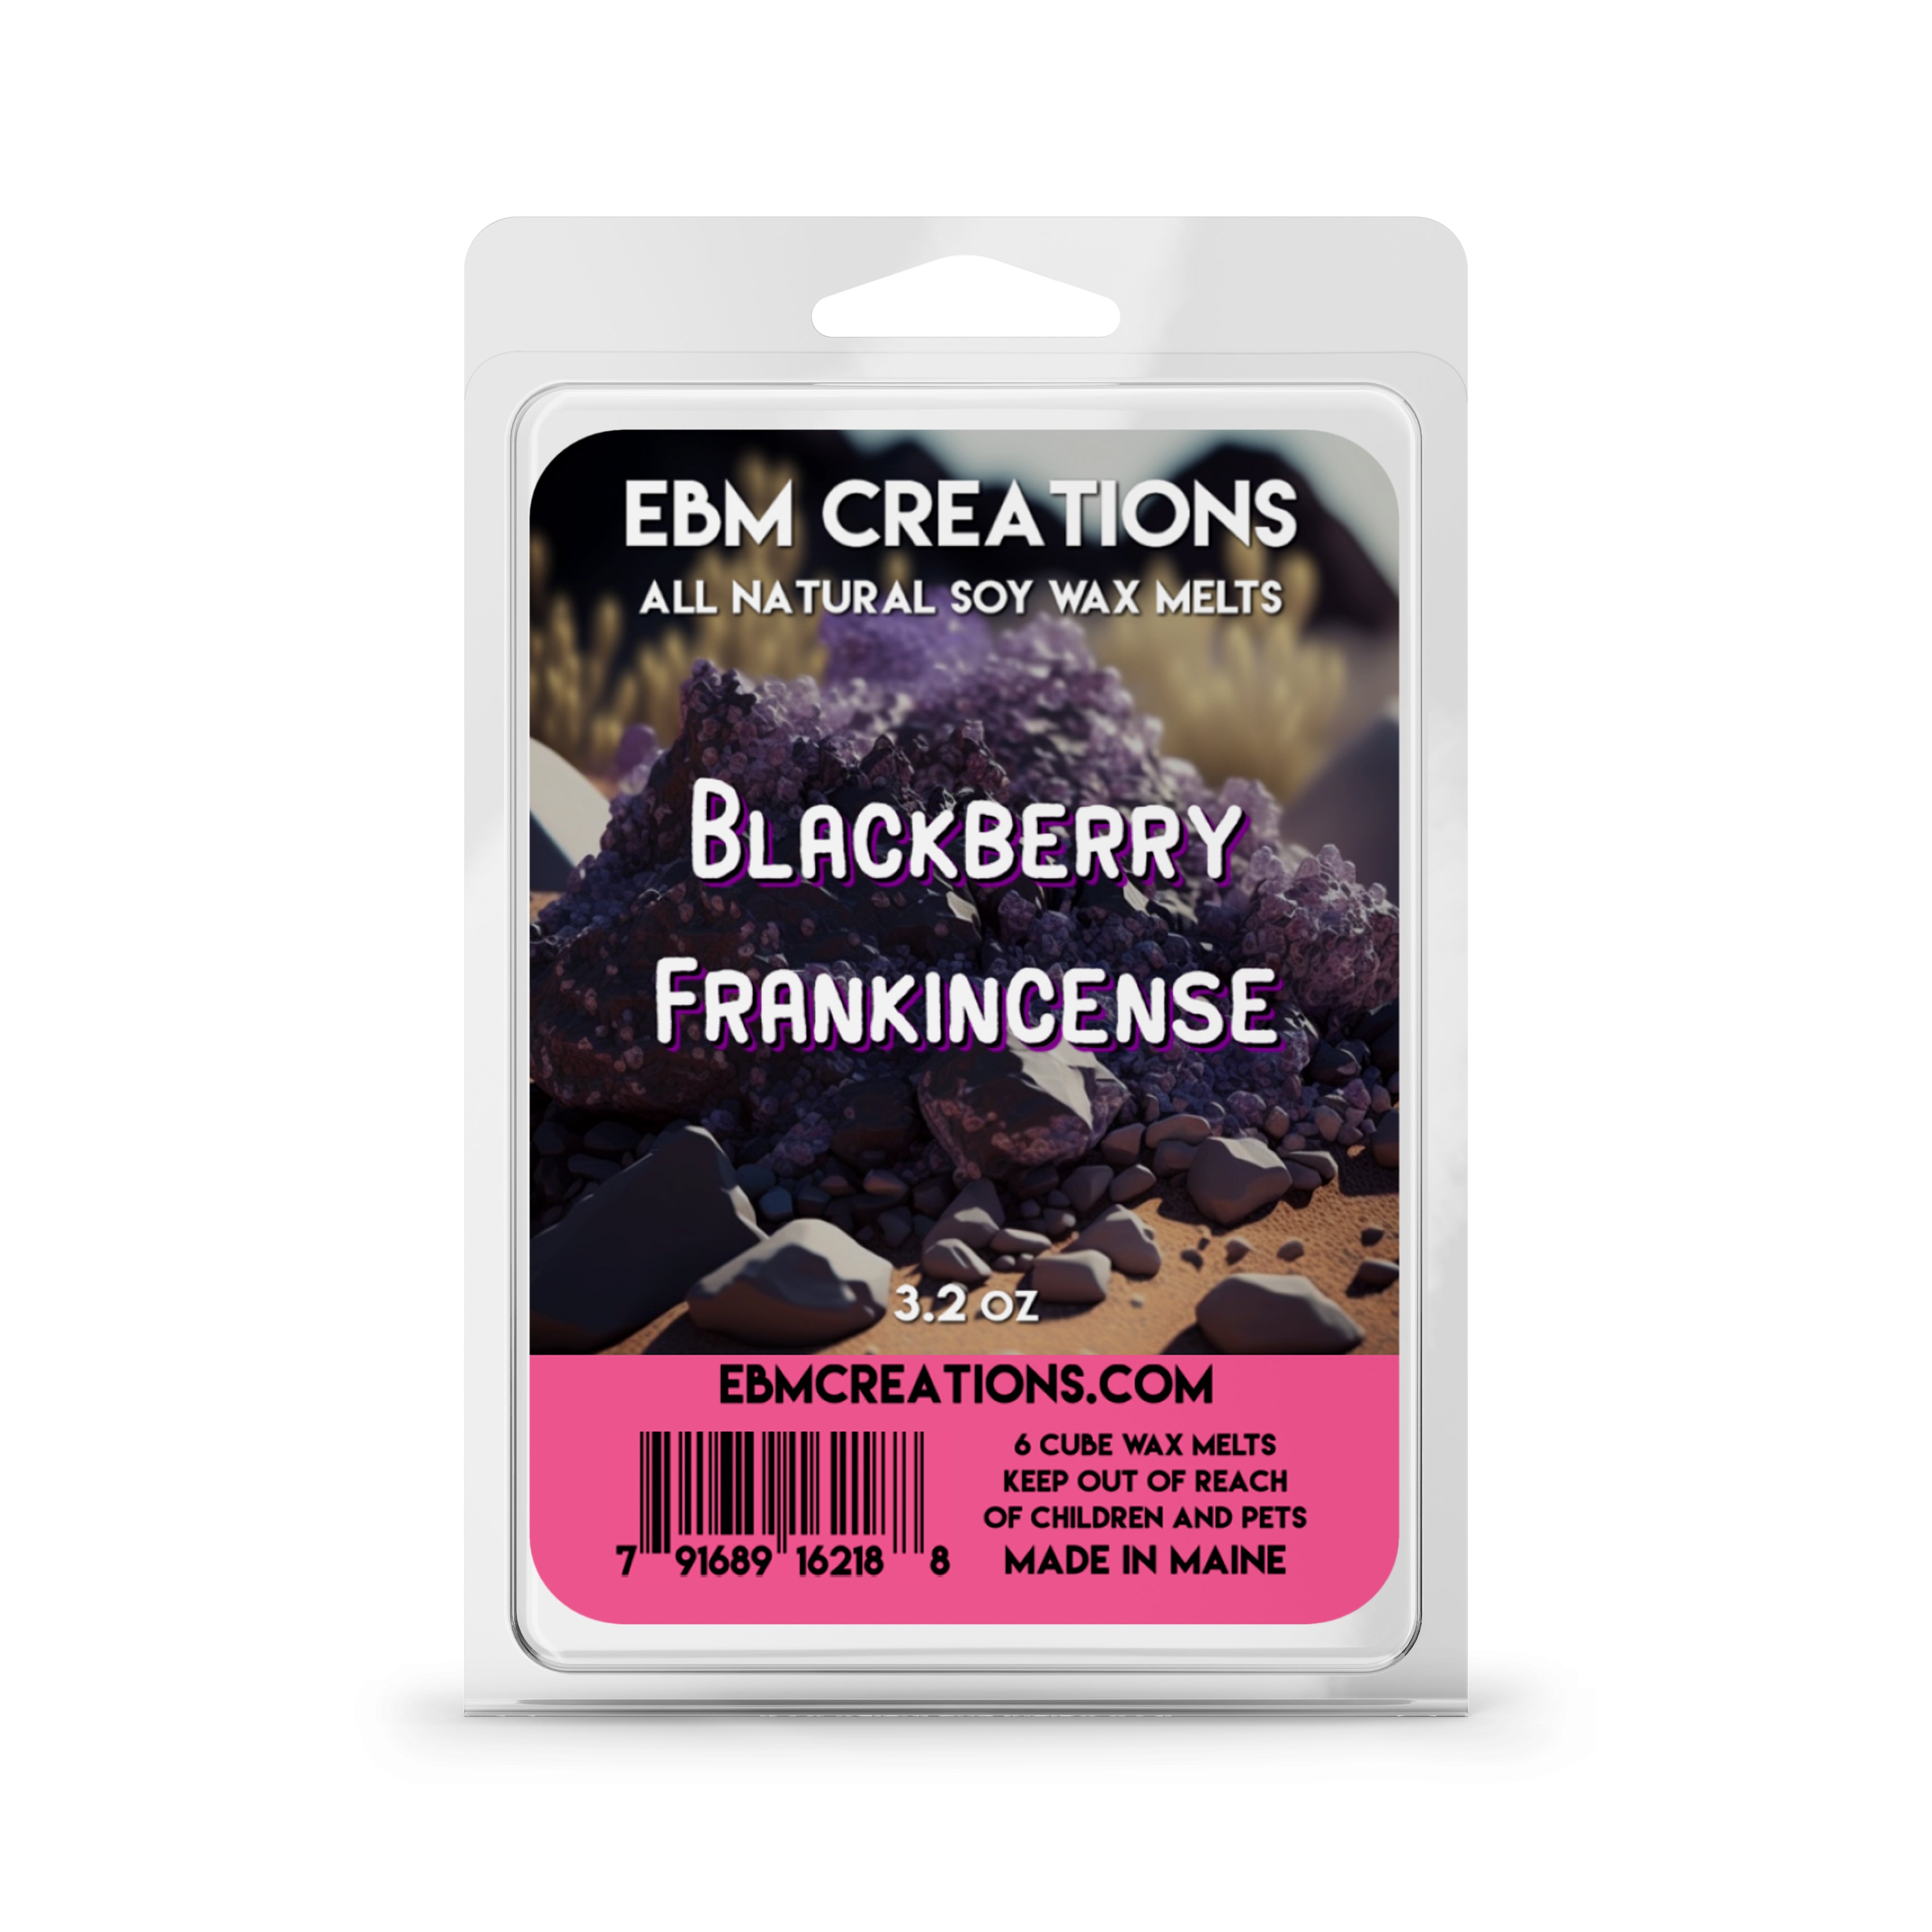 Blackberry Frankincense - 3.2 oz Clamshell